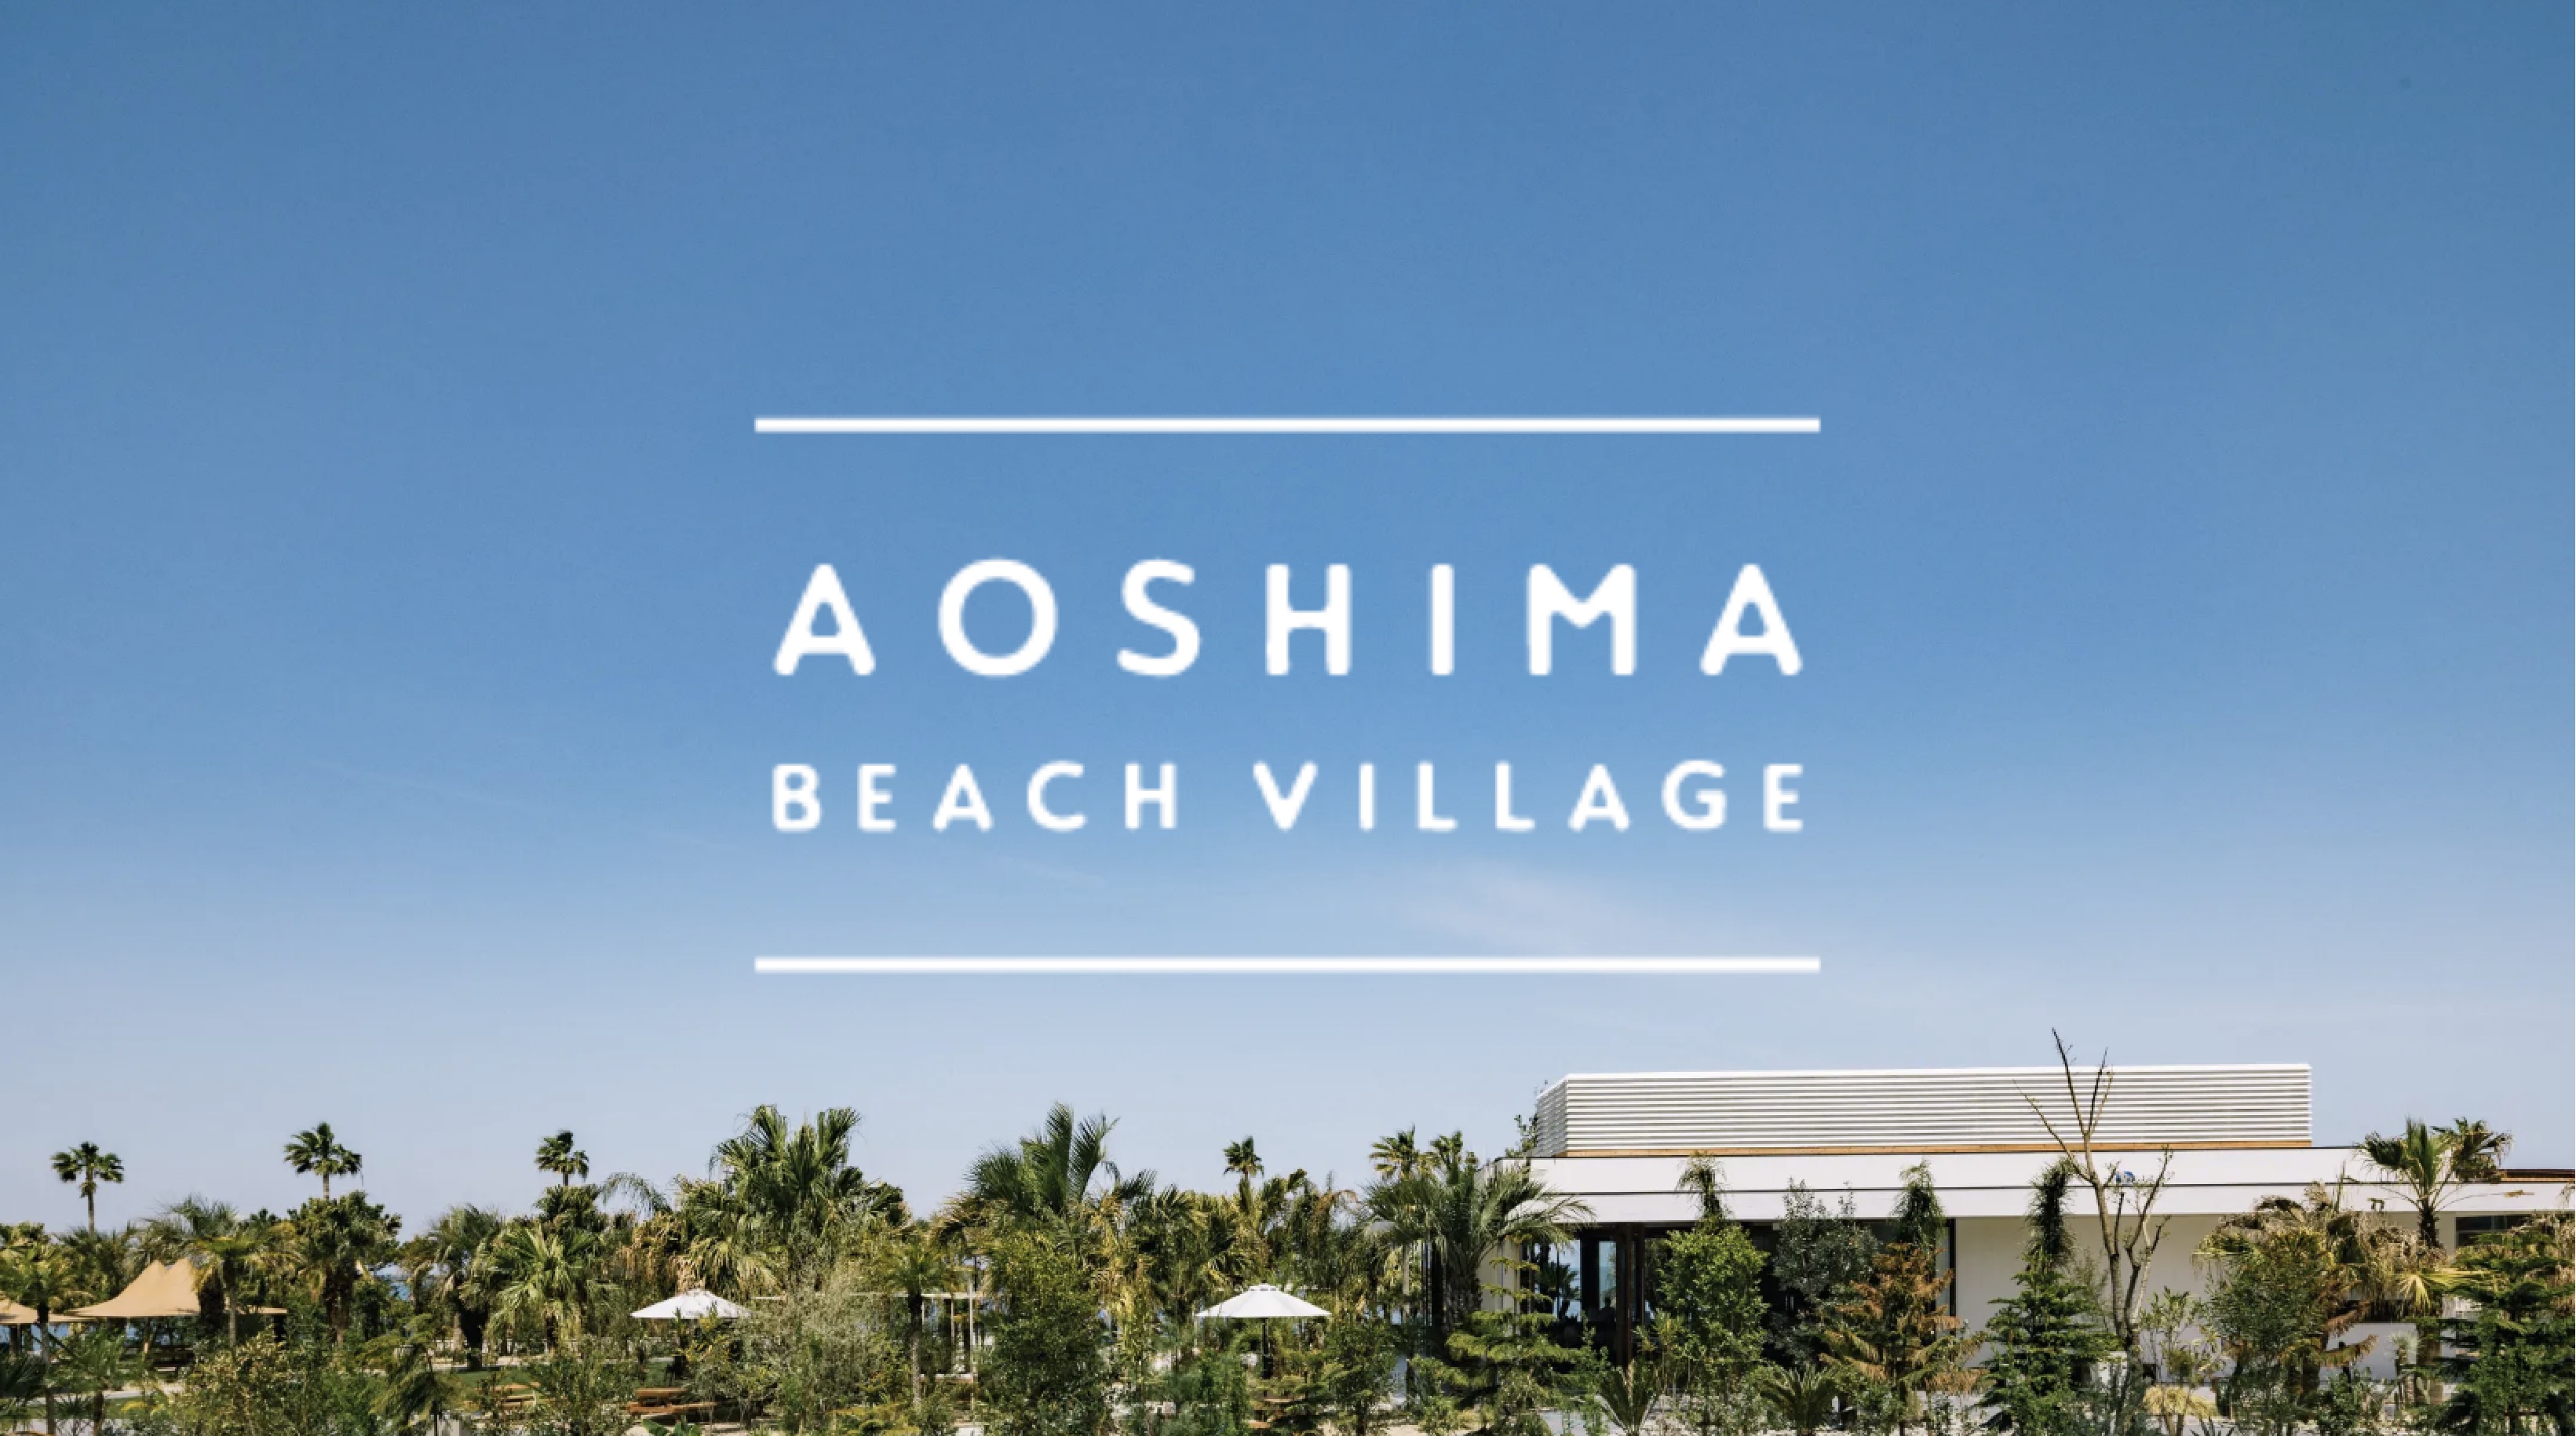 AOSHIMA BEACH VILLAGE